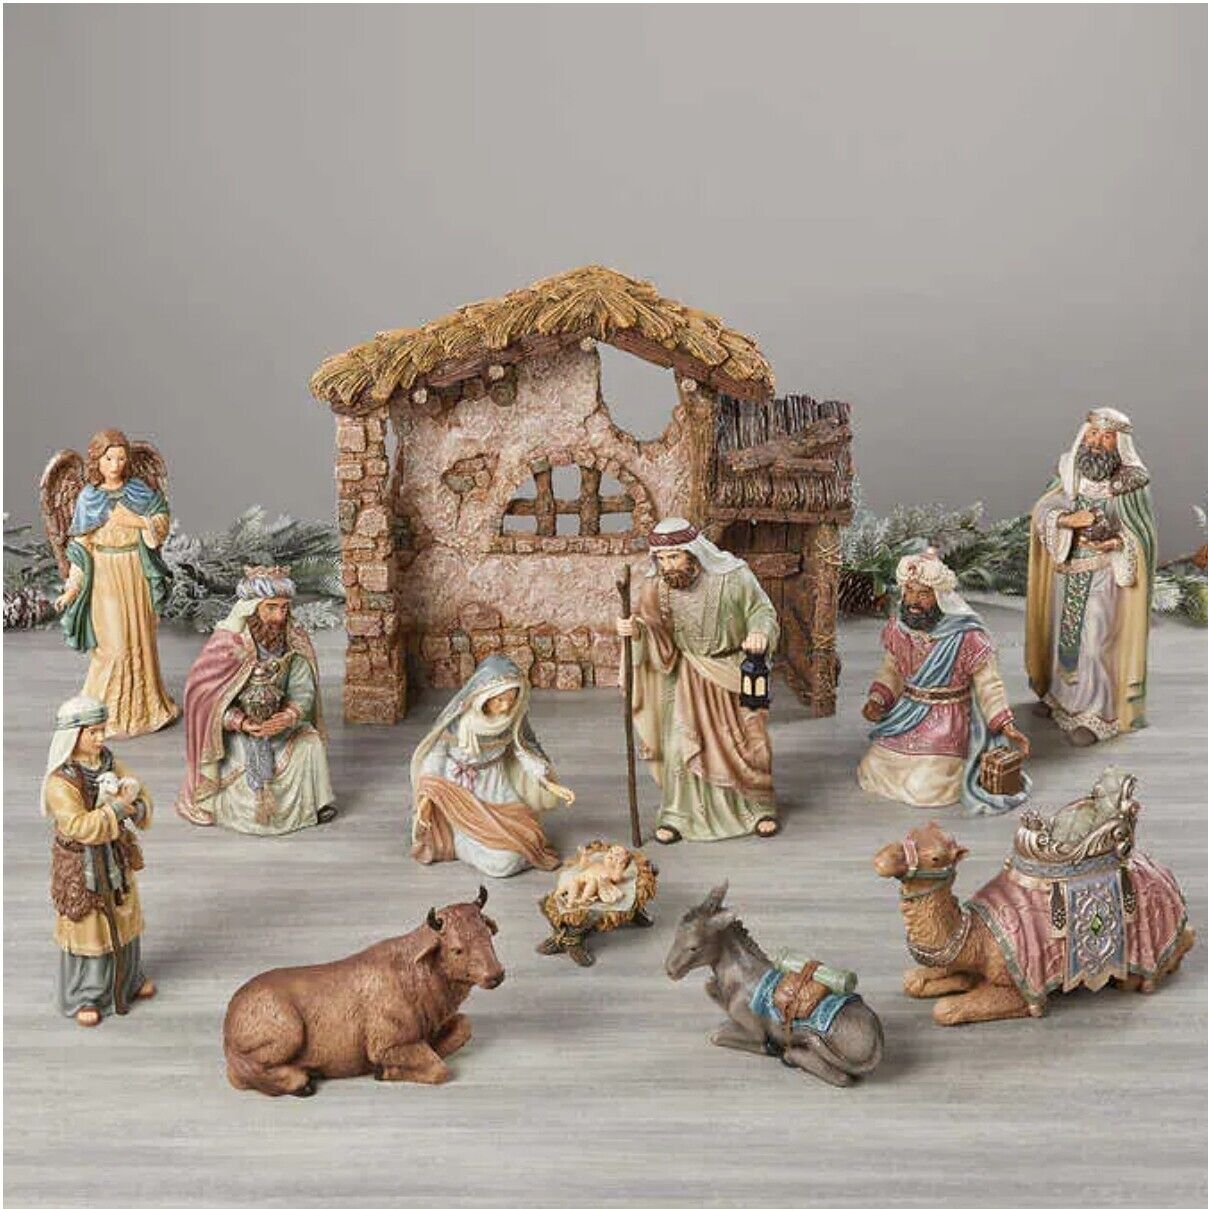 Kirkland Signature - 13-piece Hand-Painted Nativity Set